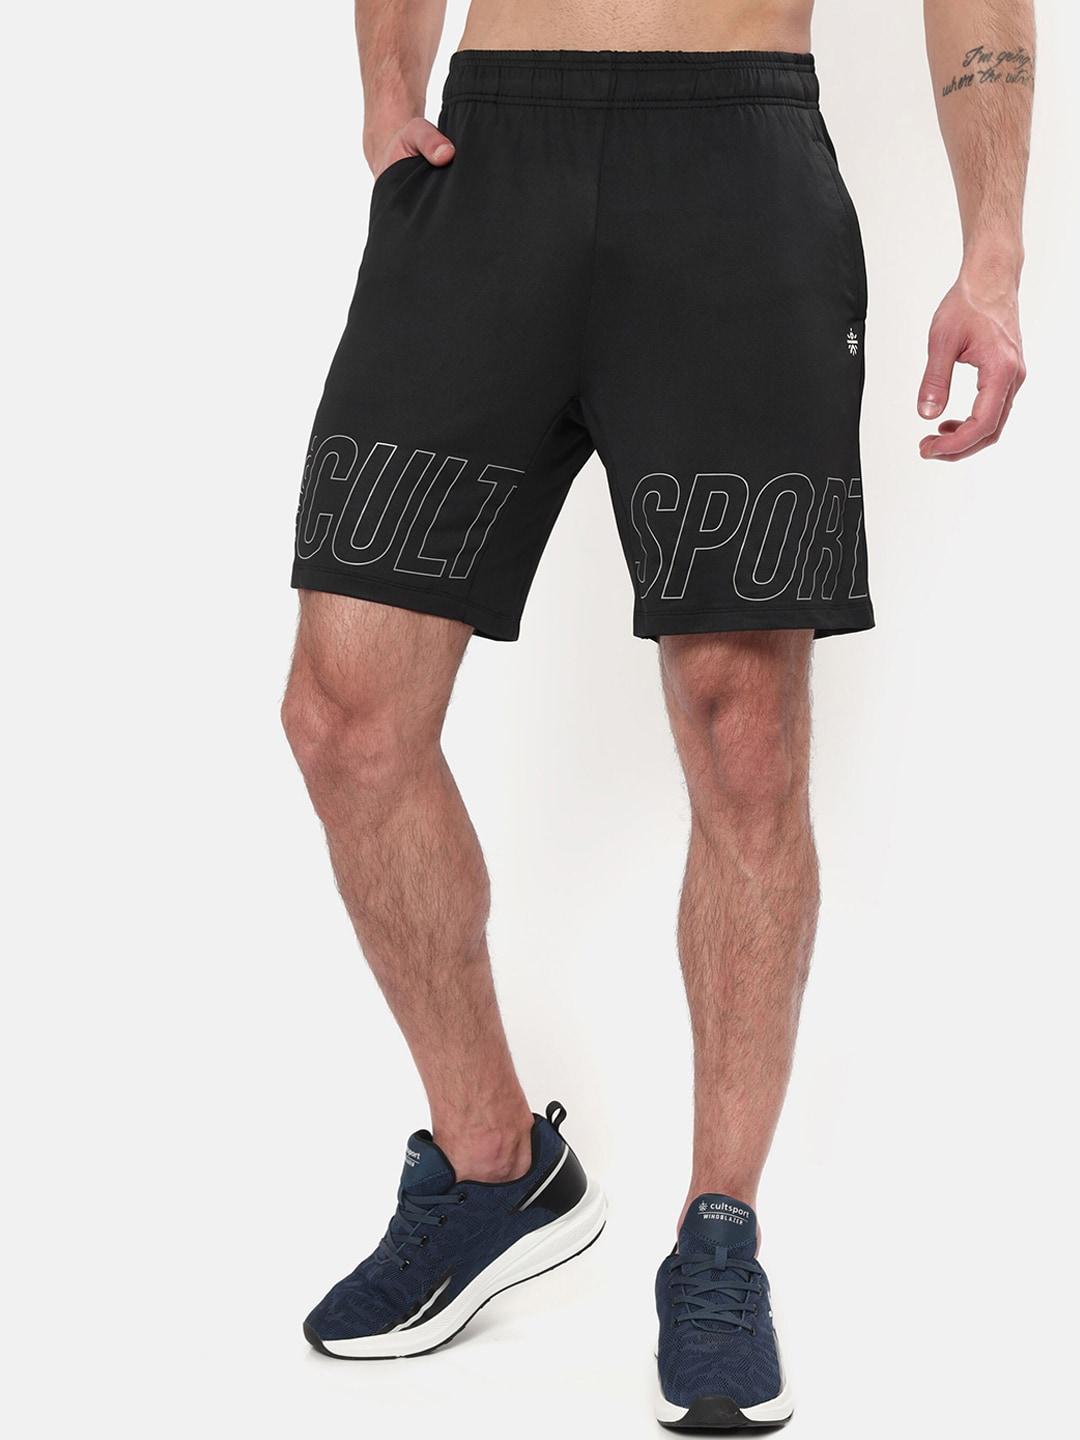 cultsport-men-black-printed-running-sports-shorts